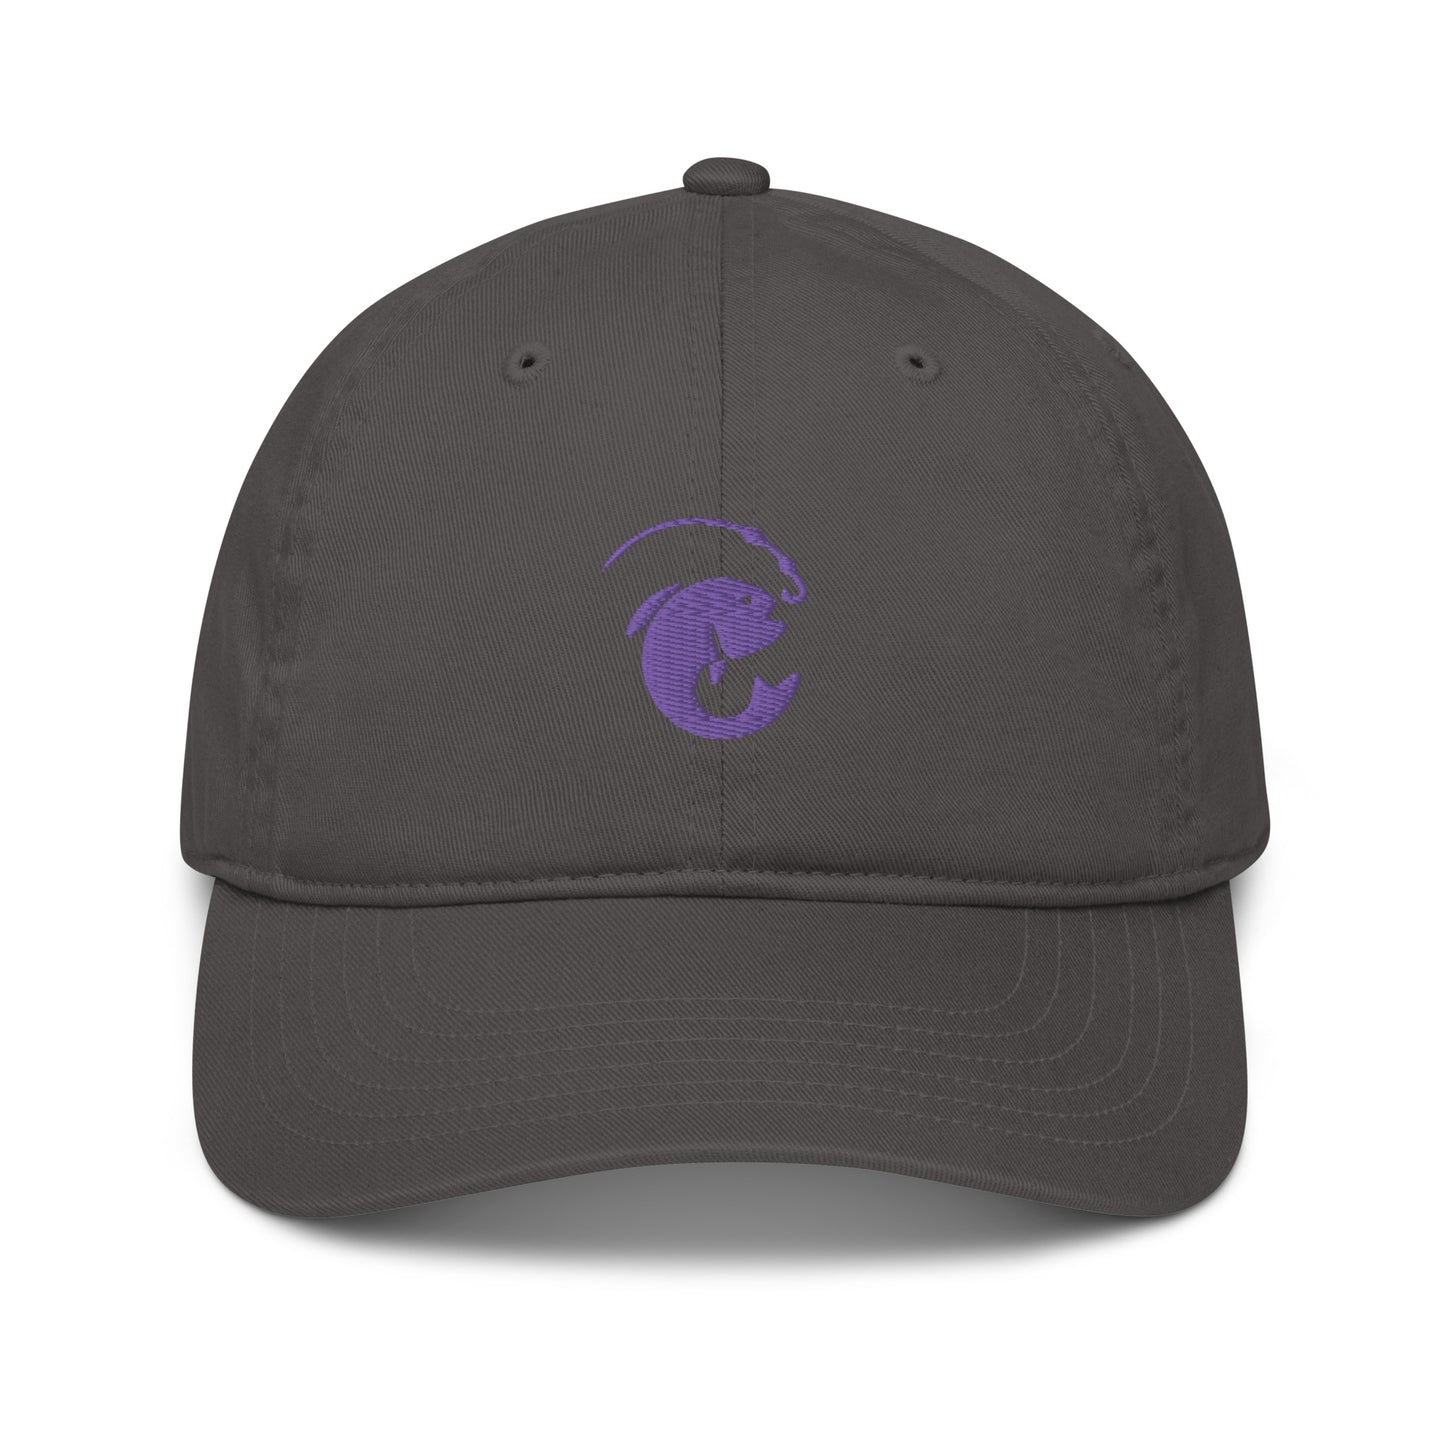 BAITCAMP Purple Baseball Cap